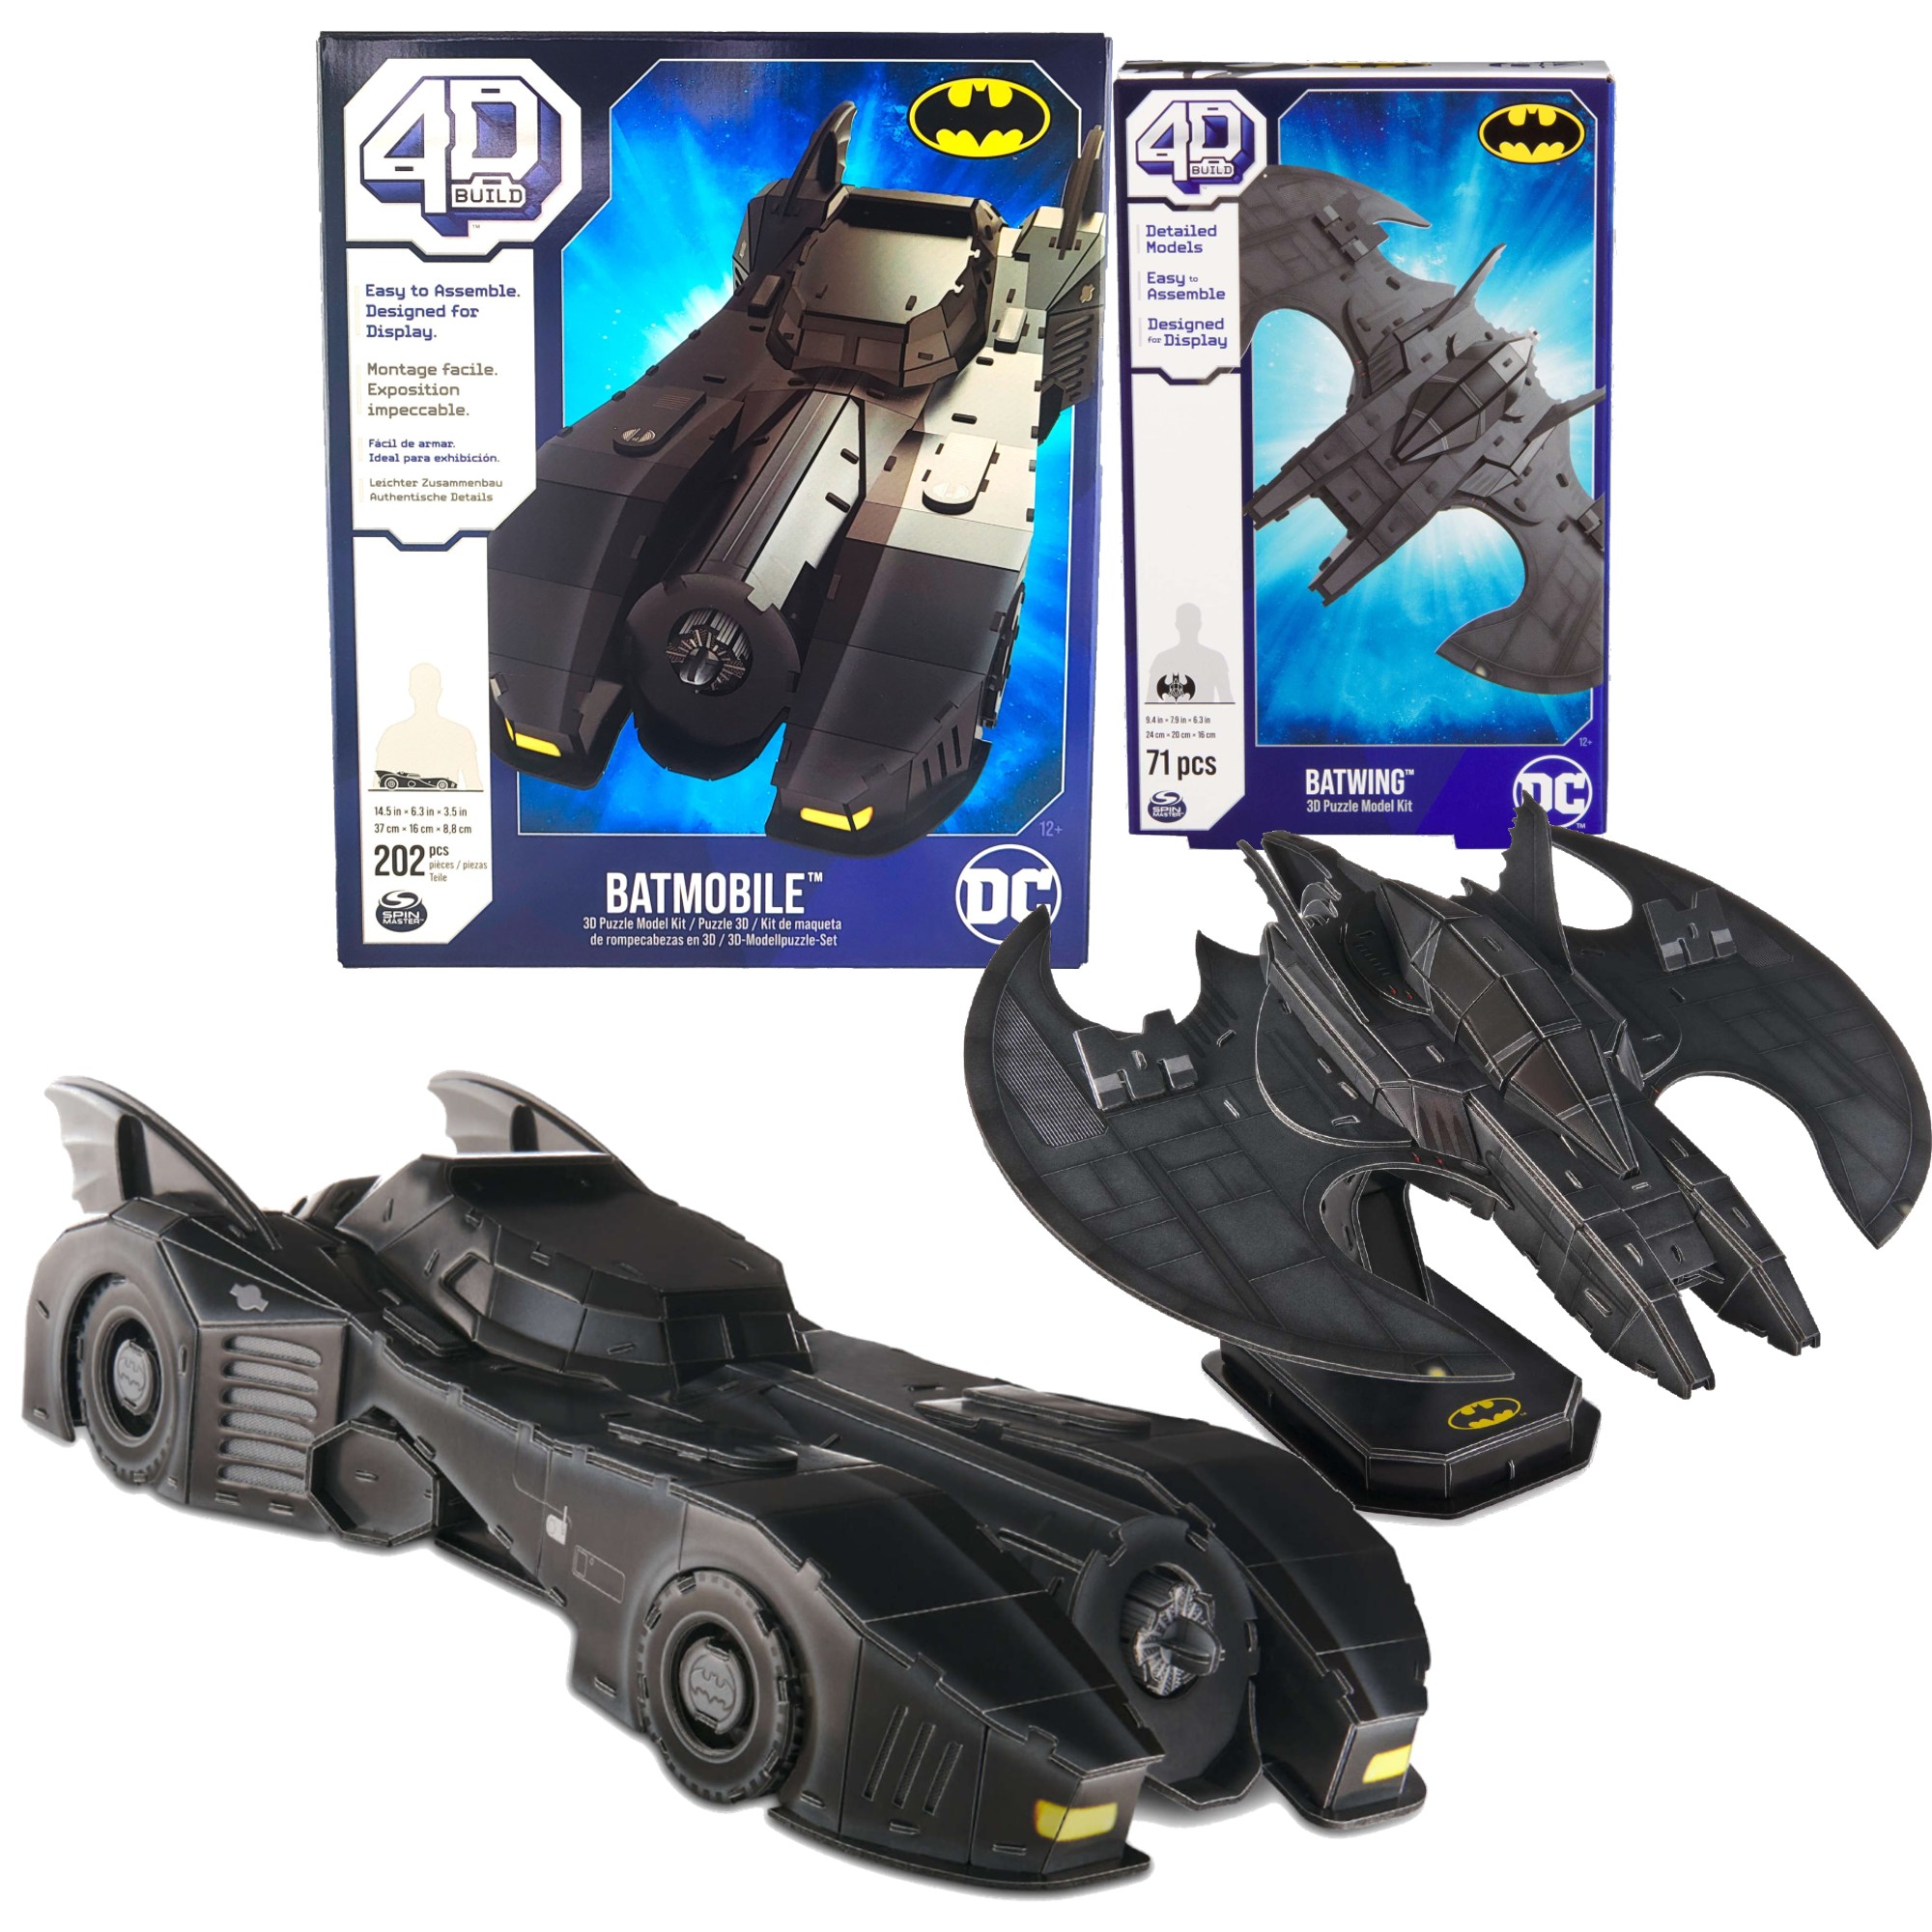 Puzzle 4D Build Batman Batmobile oraz Batwing modeli aut 3D do zoenia